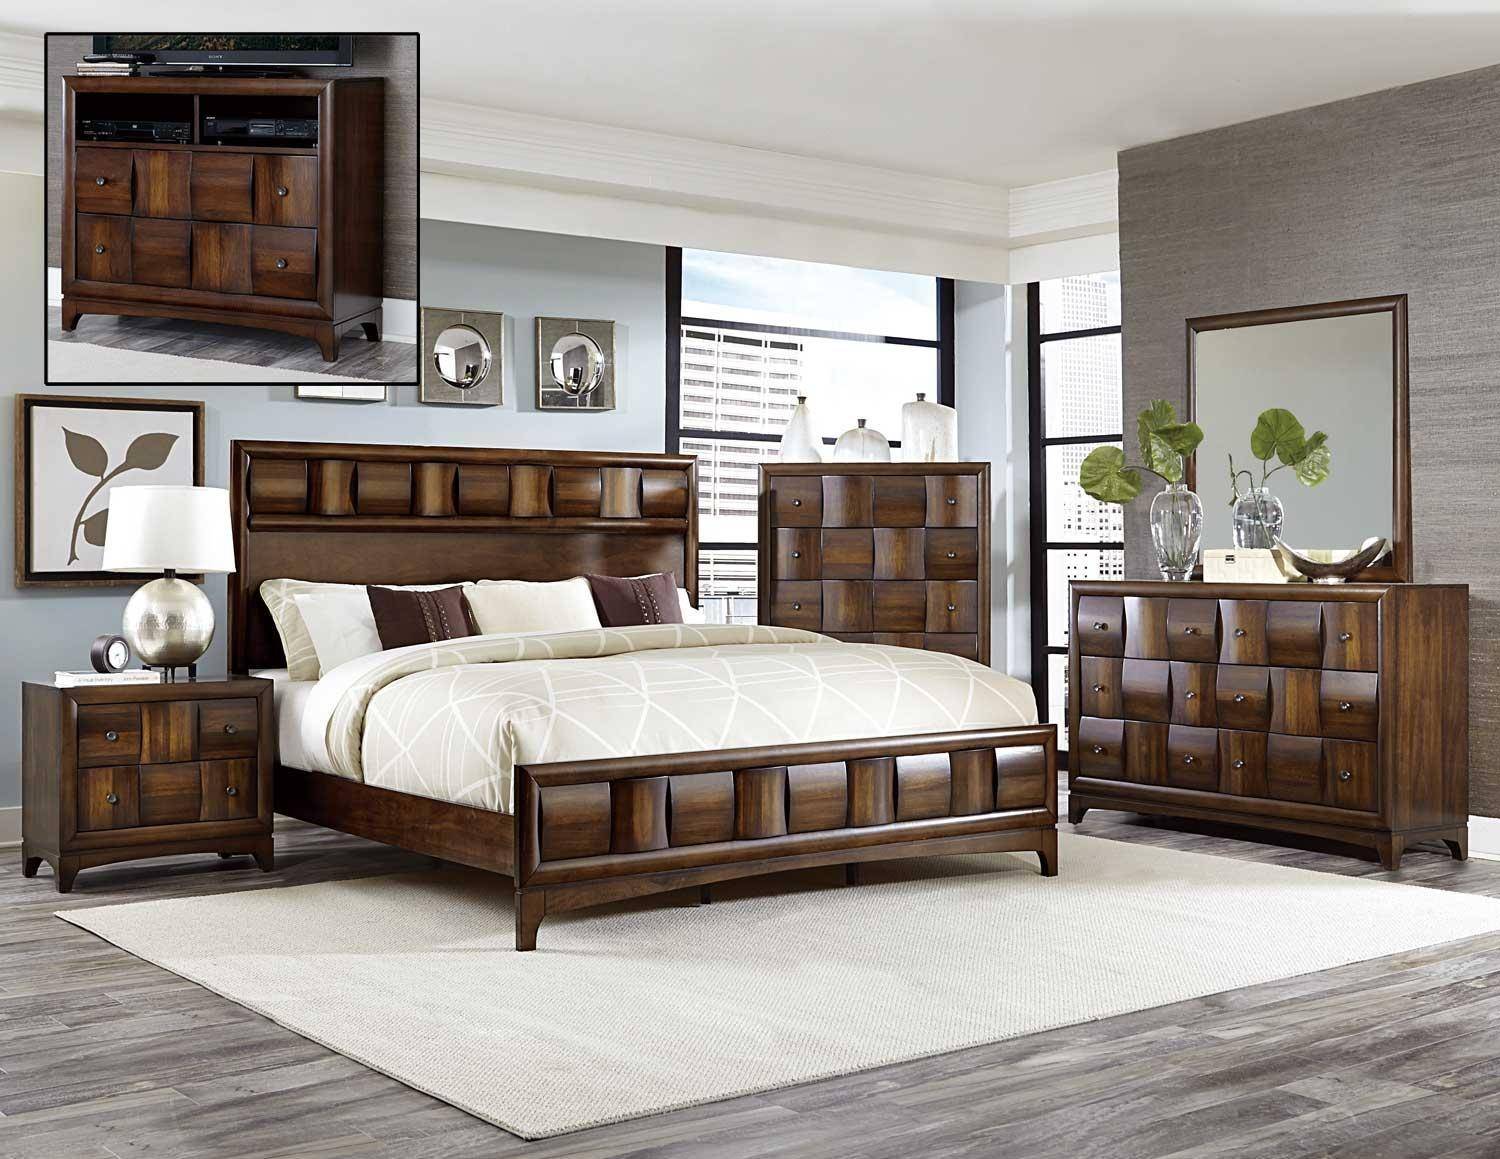 buy bedroom furniture in doncaster